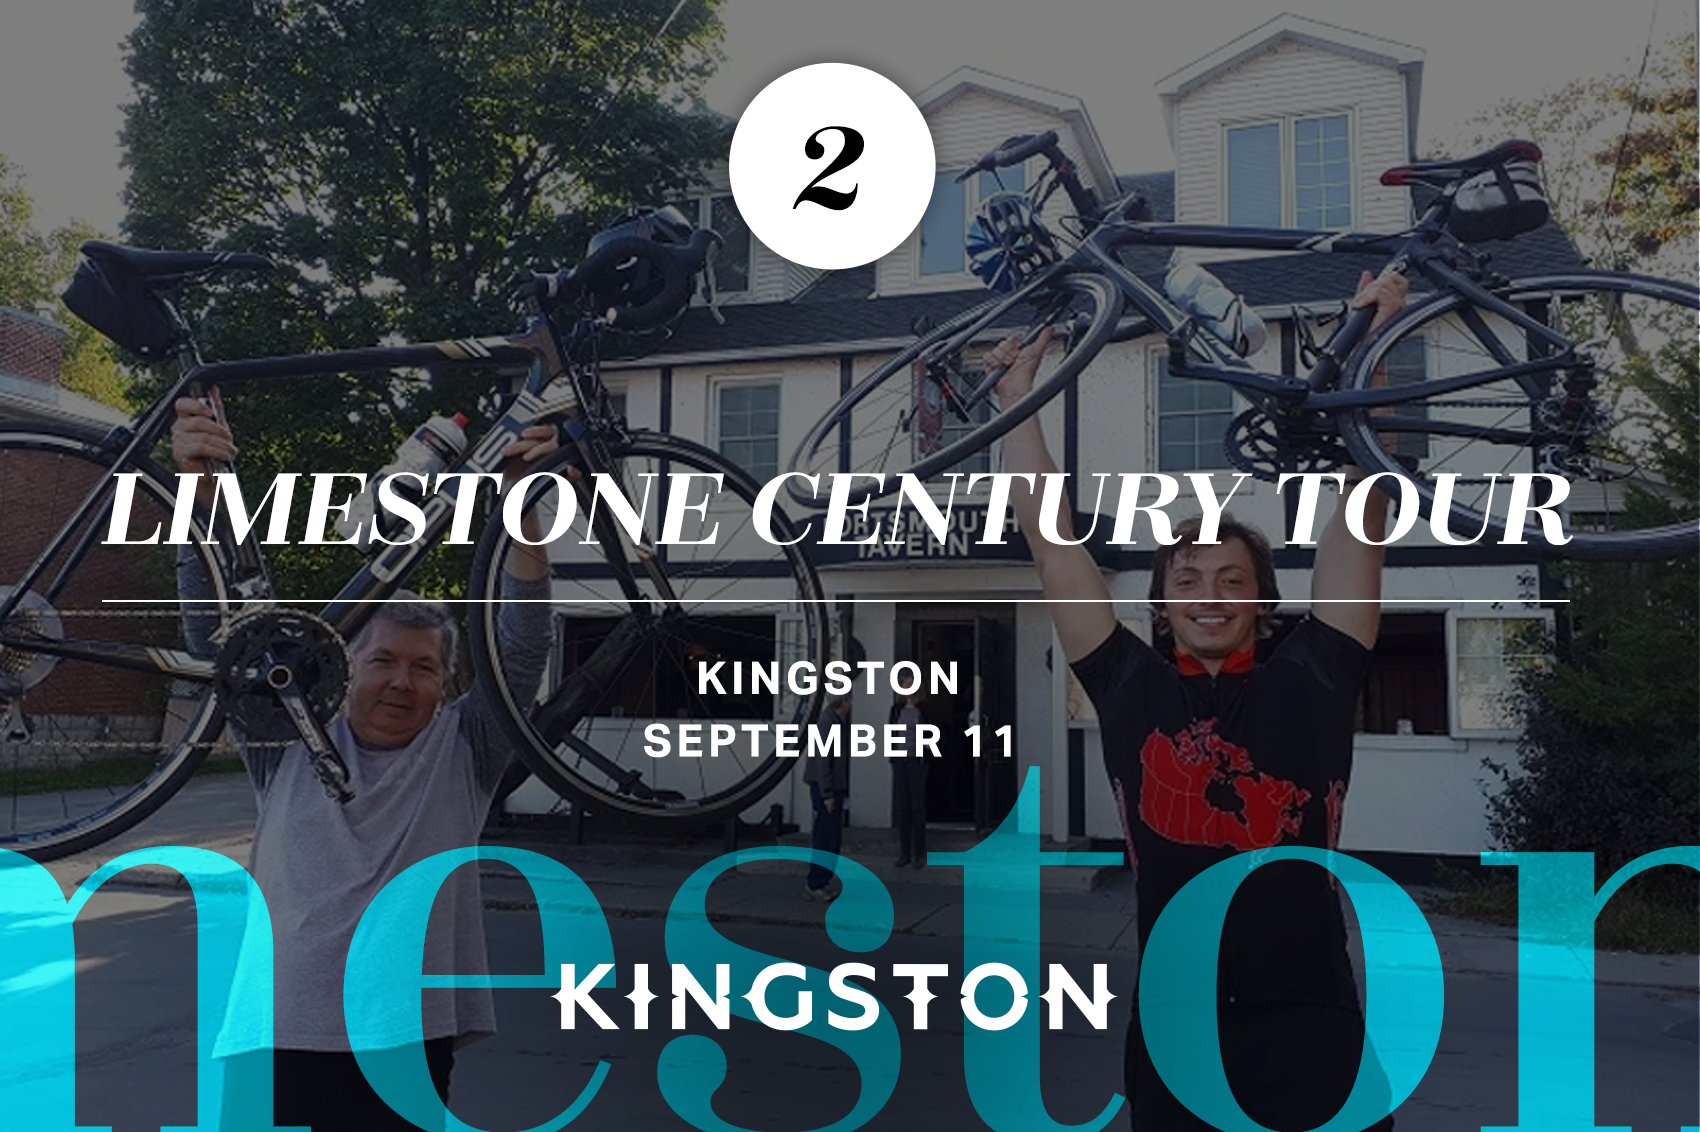 2. Limestone Century Tour: Kingston September 11